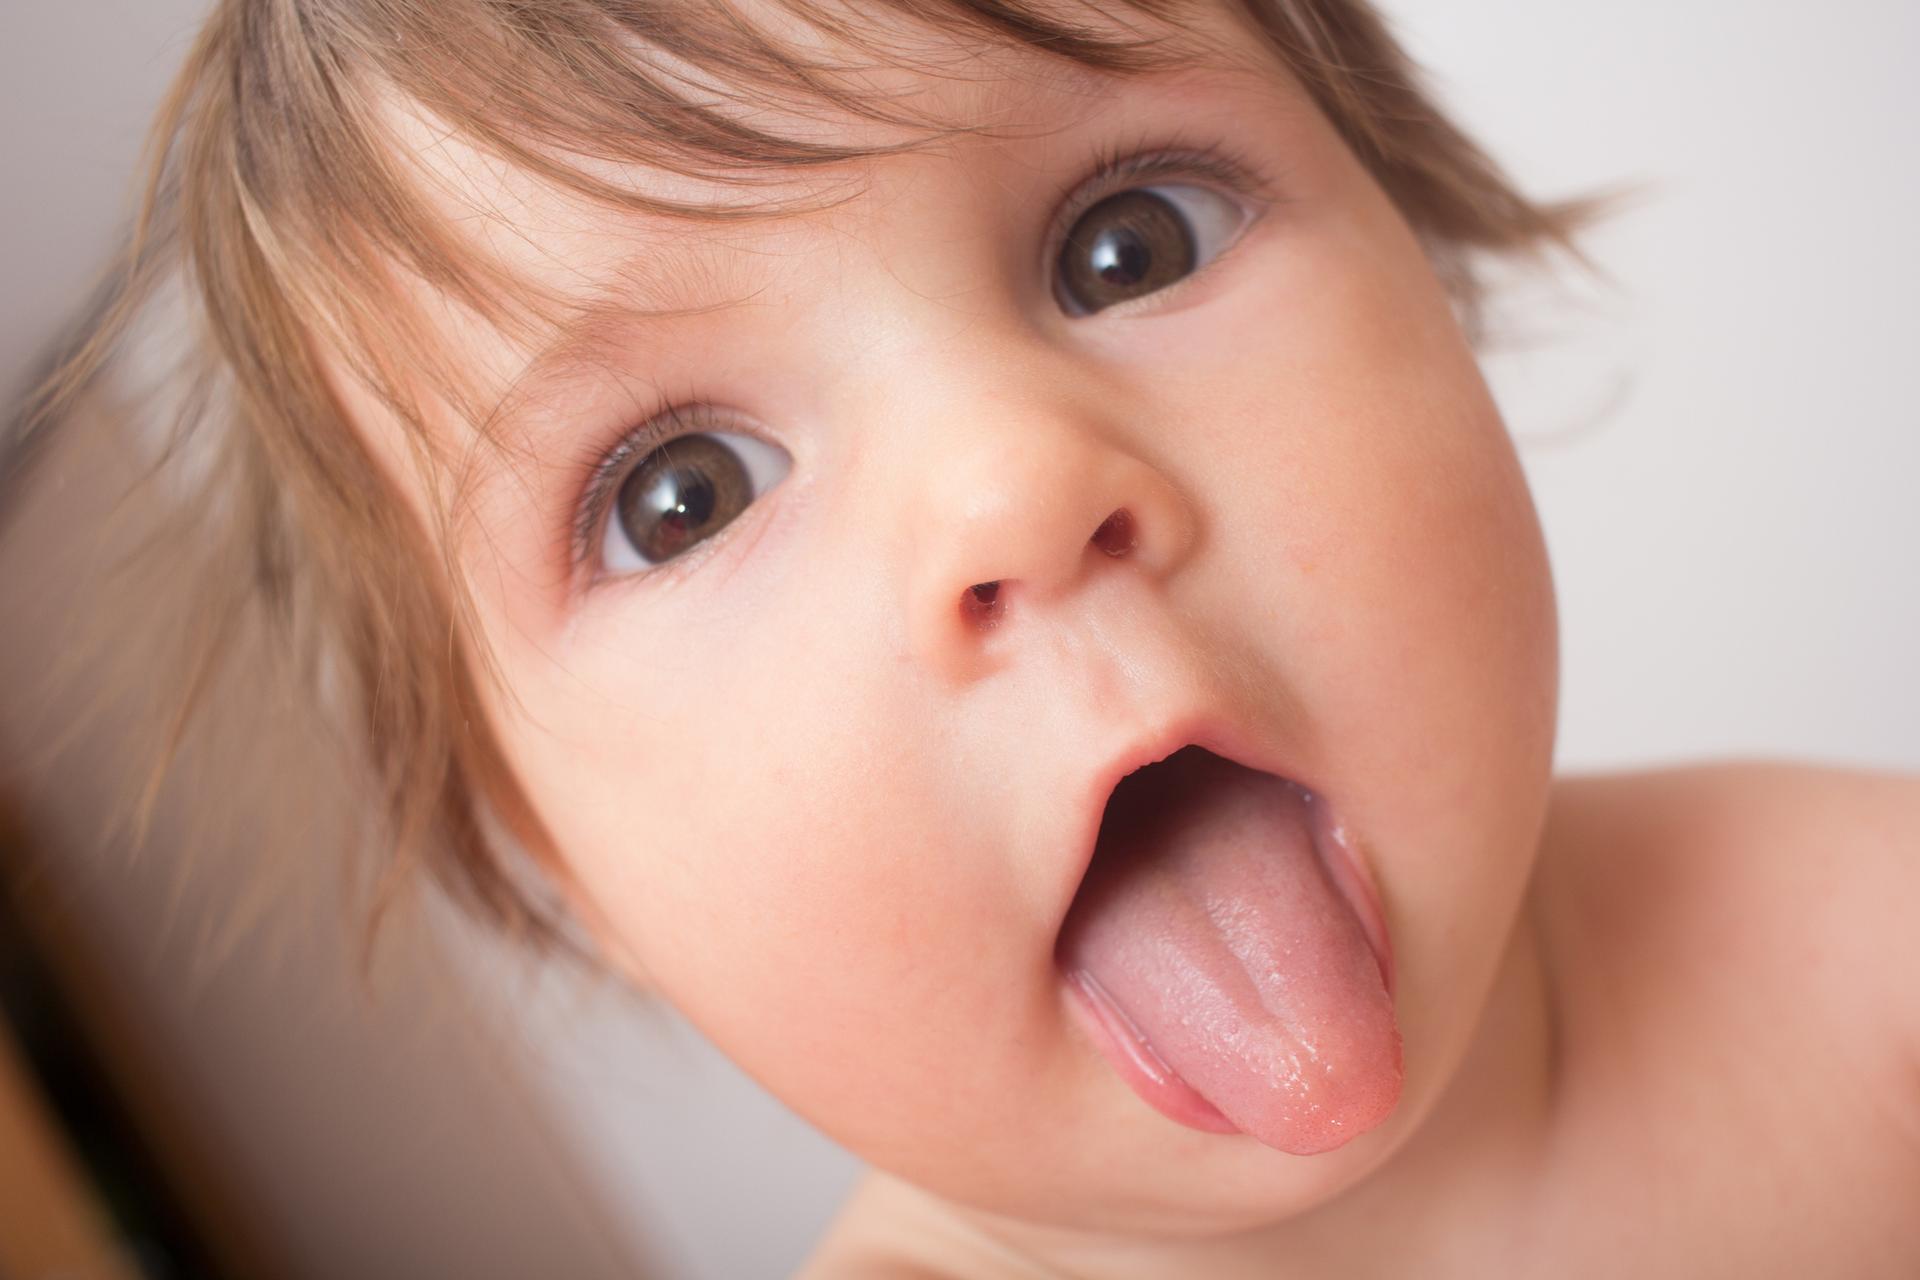 Baby show tongue